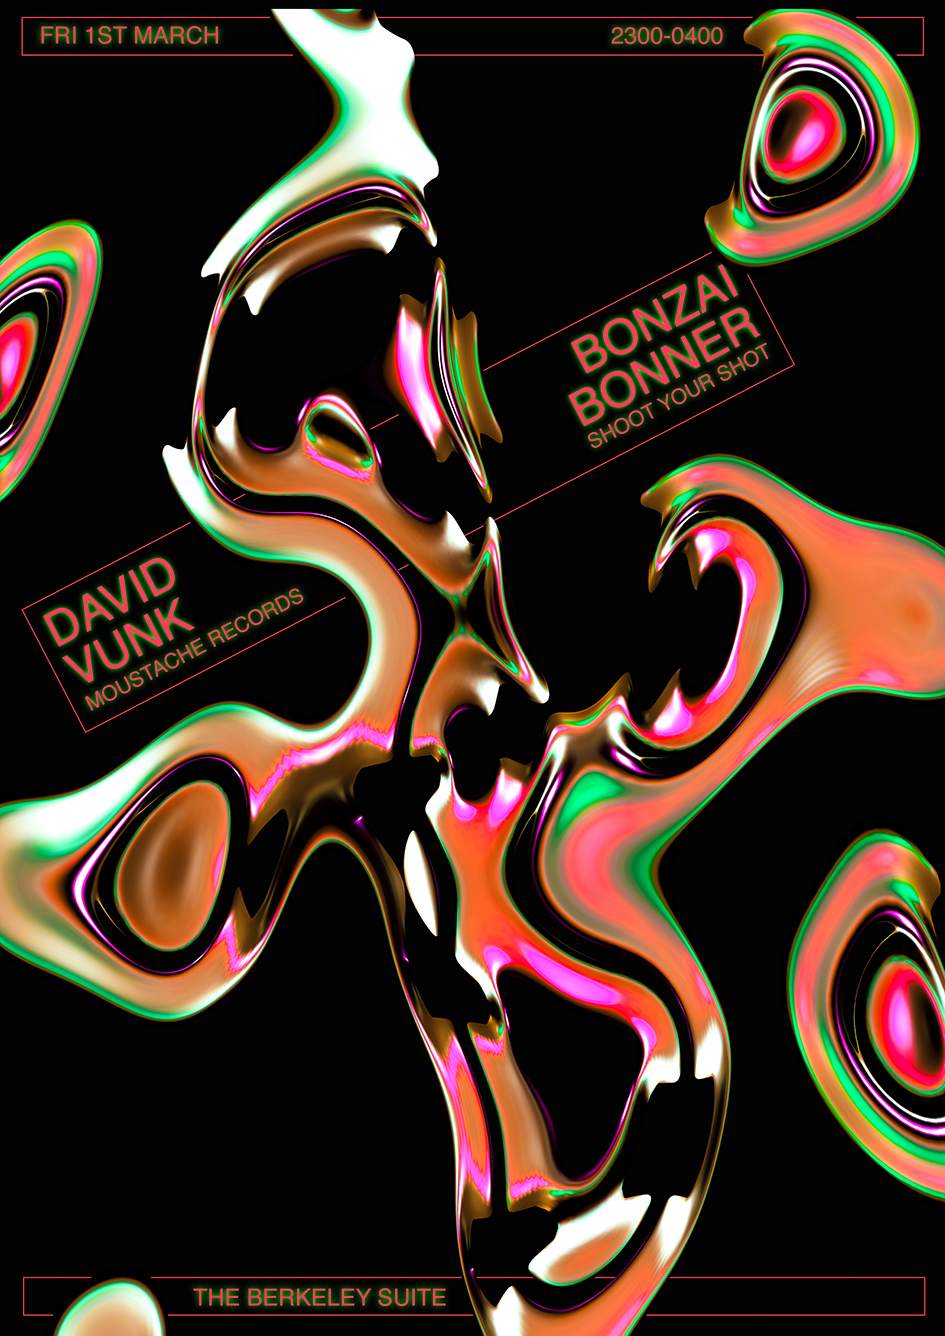 David Vunk (Moustache Records) & Bonzai Bonner (Shoot Your Shot) - フライヤー表